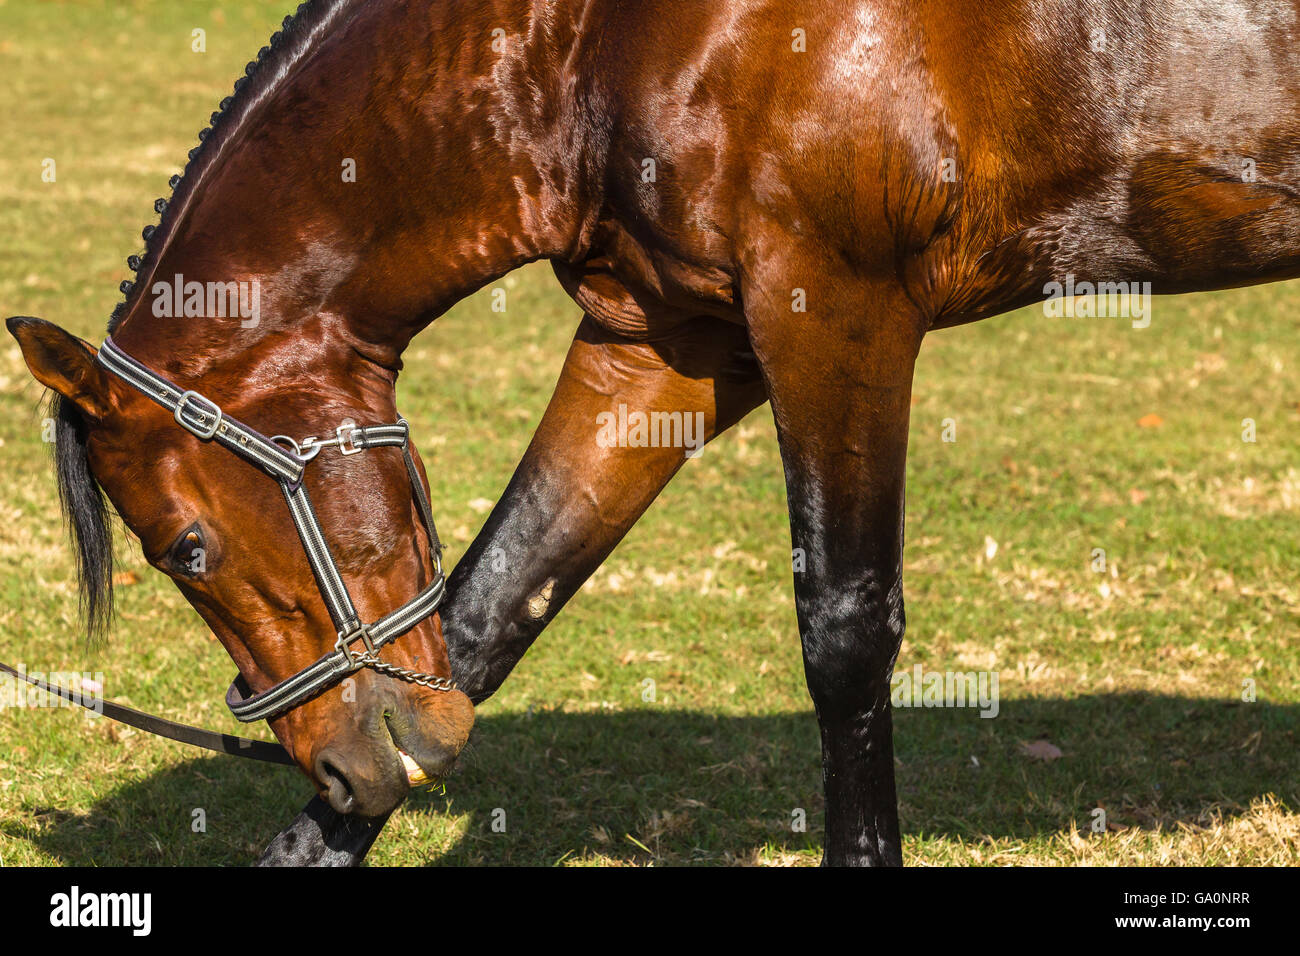 Horse pony equestrian closeup head neck body portrait of show jumping animal Stock Photo